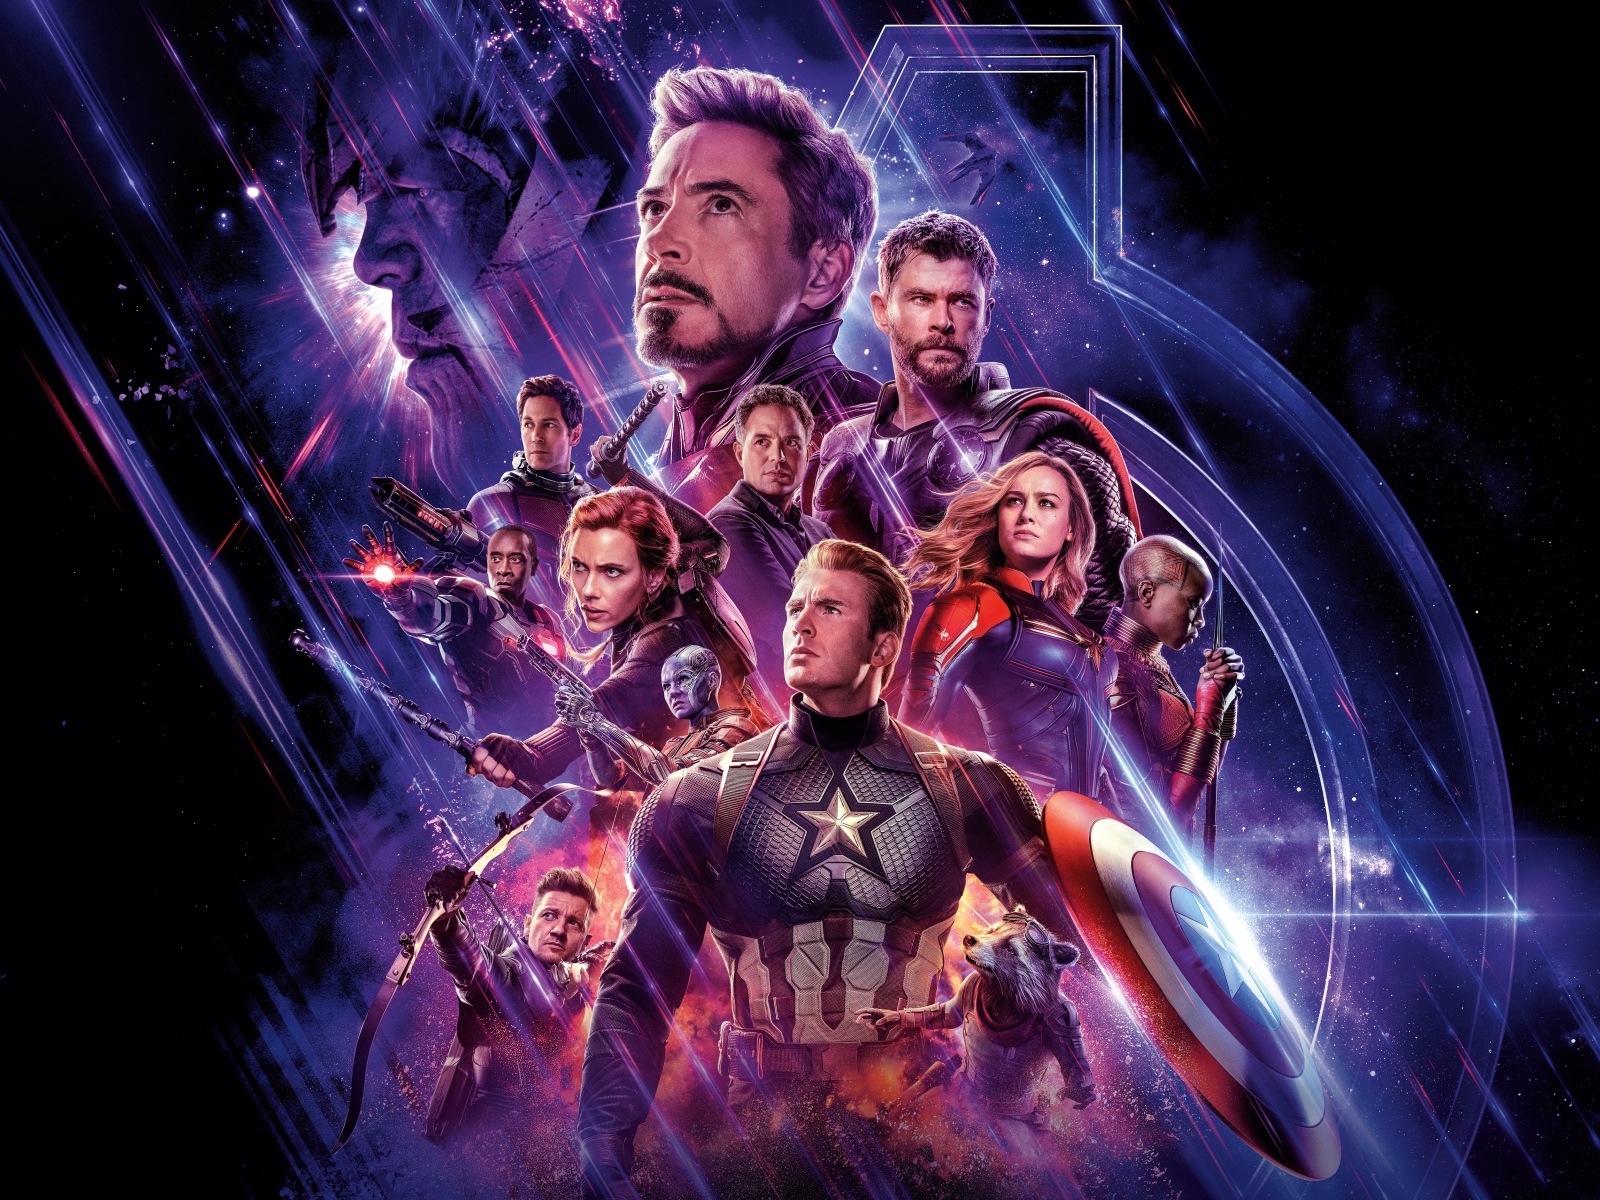 Characters superhero movie Avengers: Final 2019 year